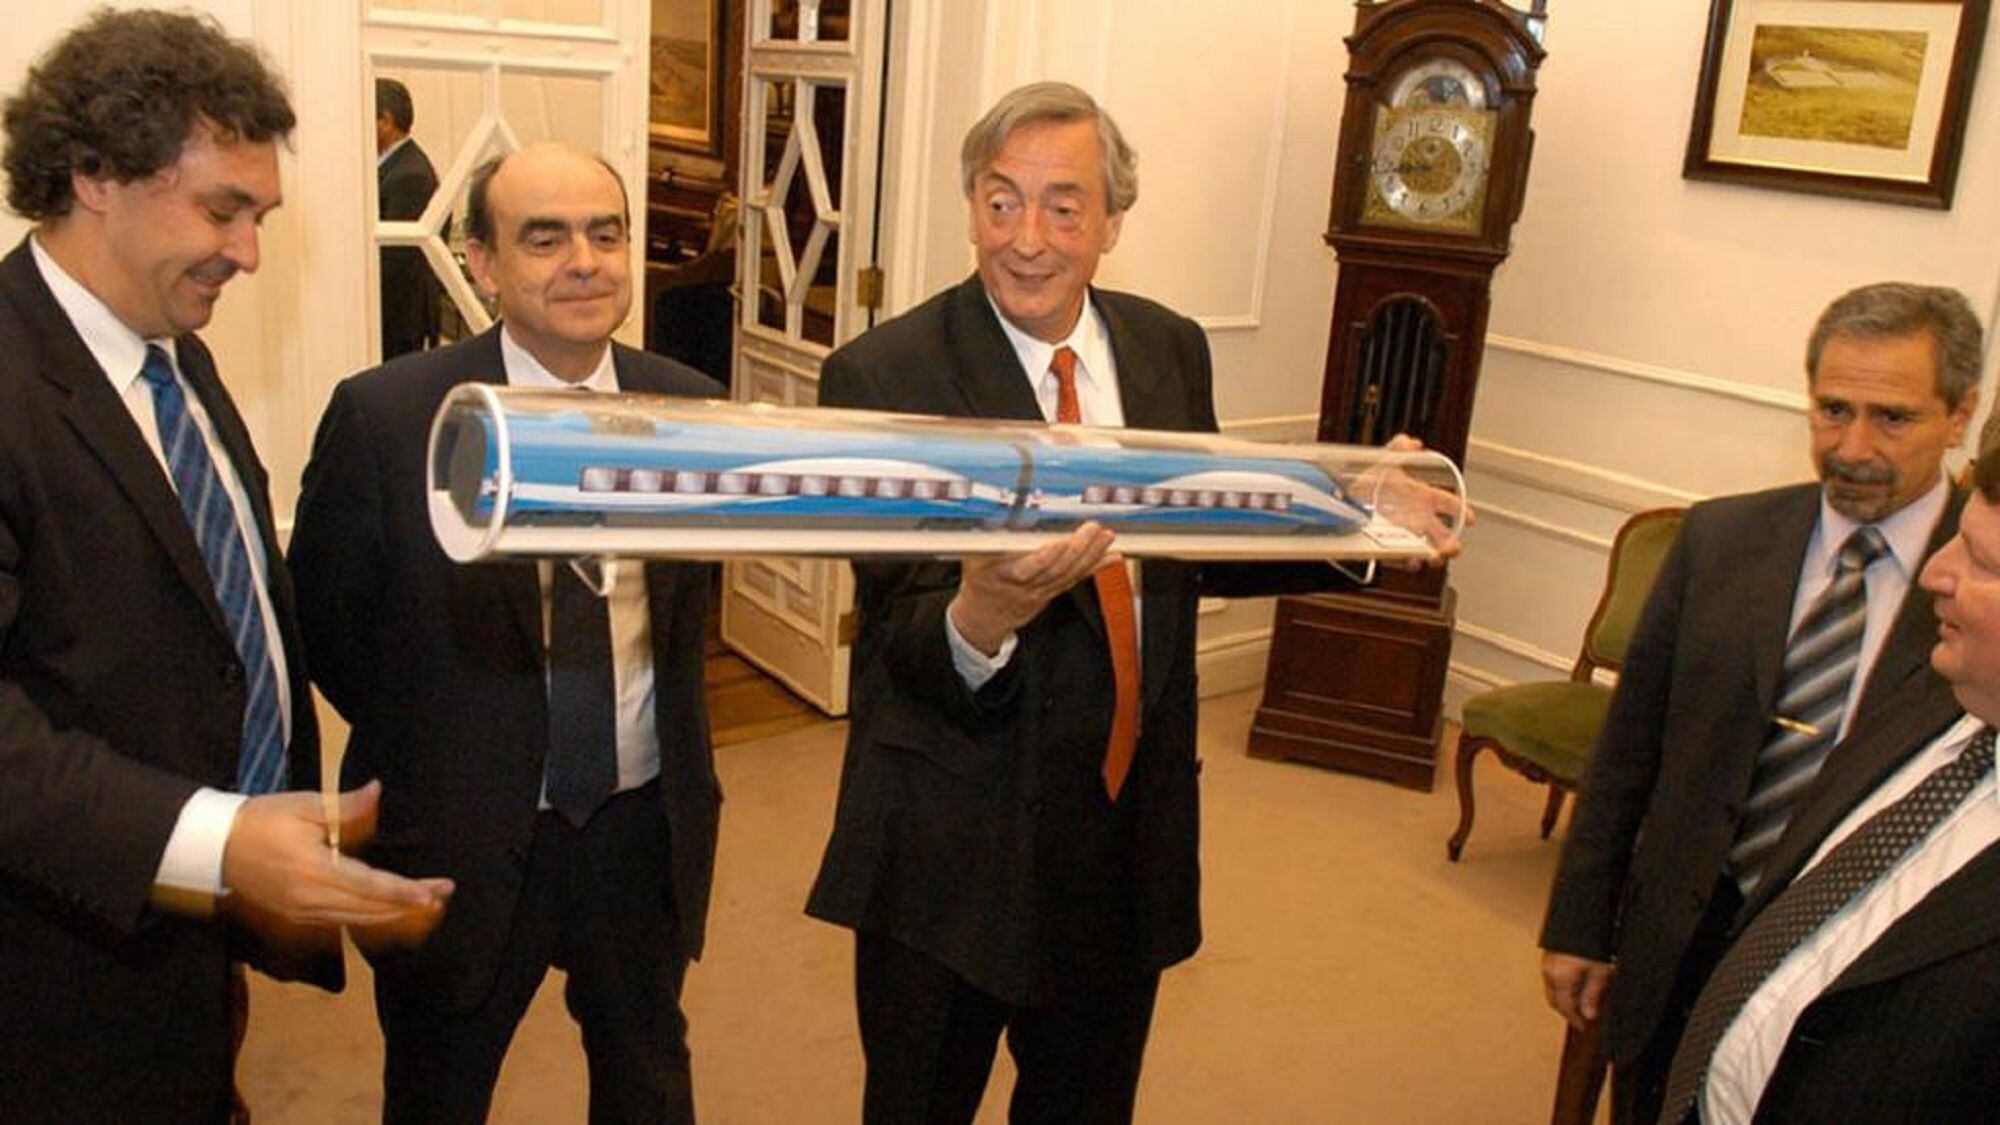 El ex presidente Kirchner, viendo la maqueta del tren bala; a su izquierda, Ricardo Jaime,es ministro de Transporte